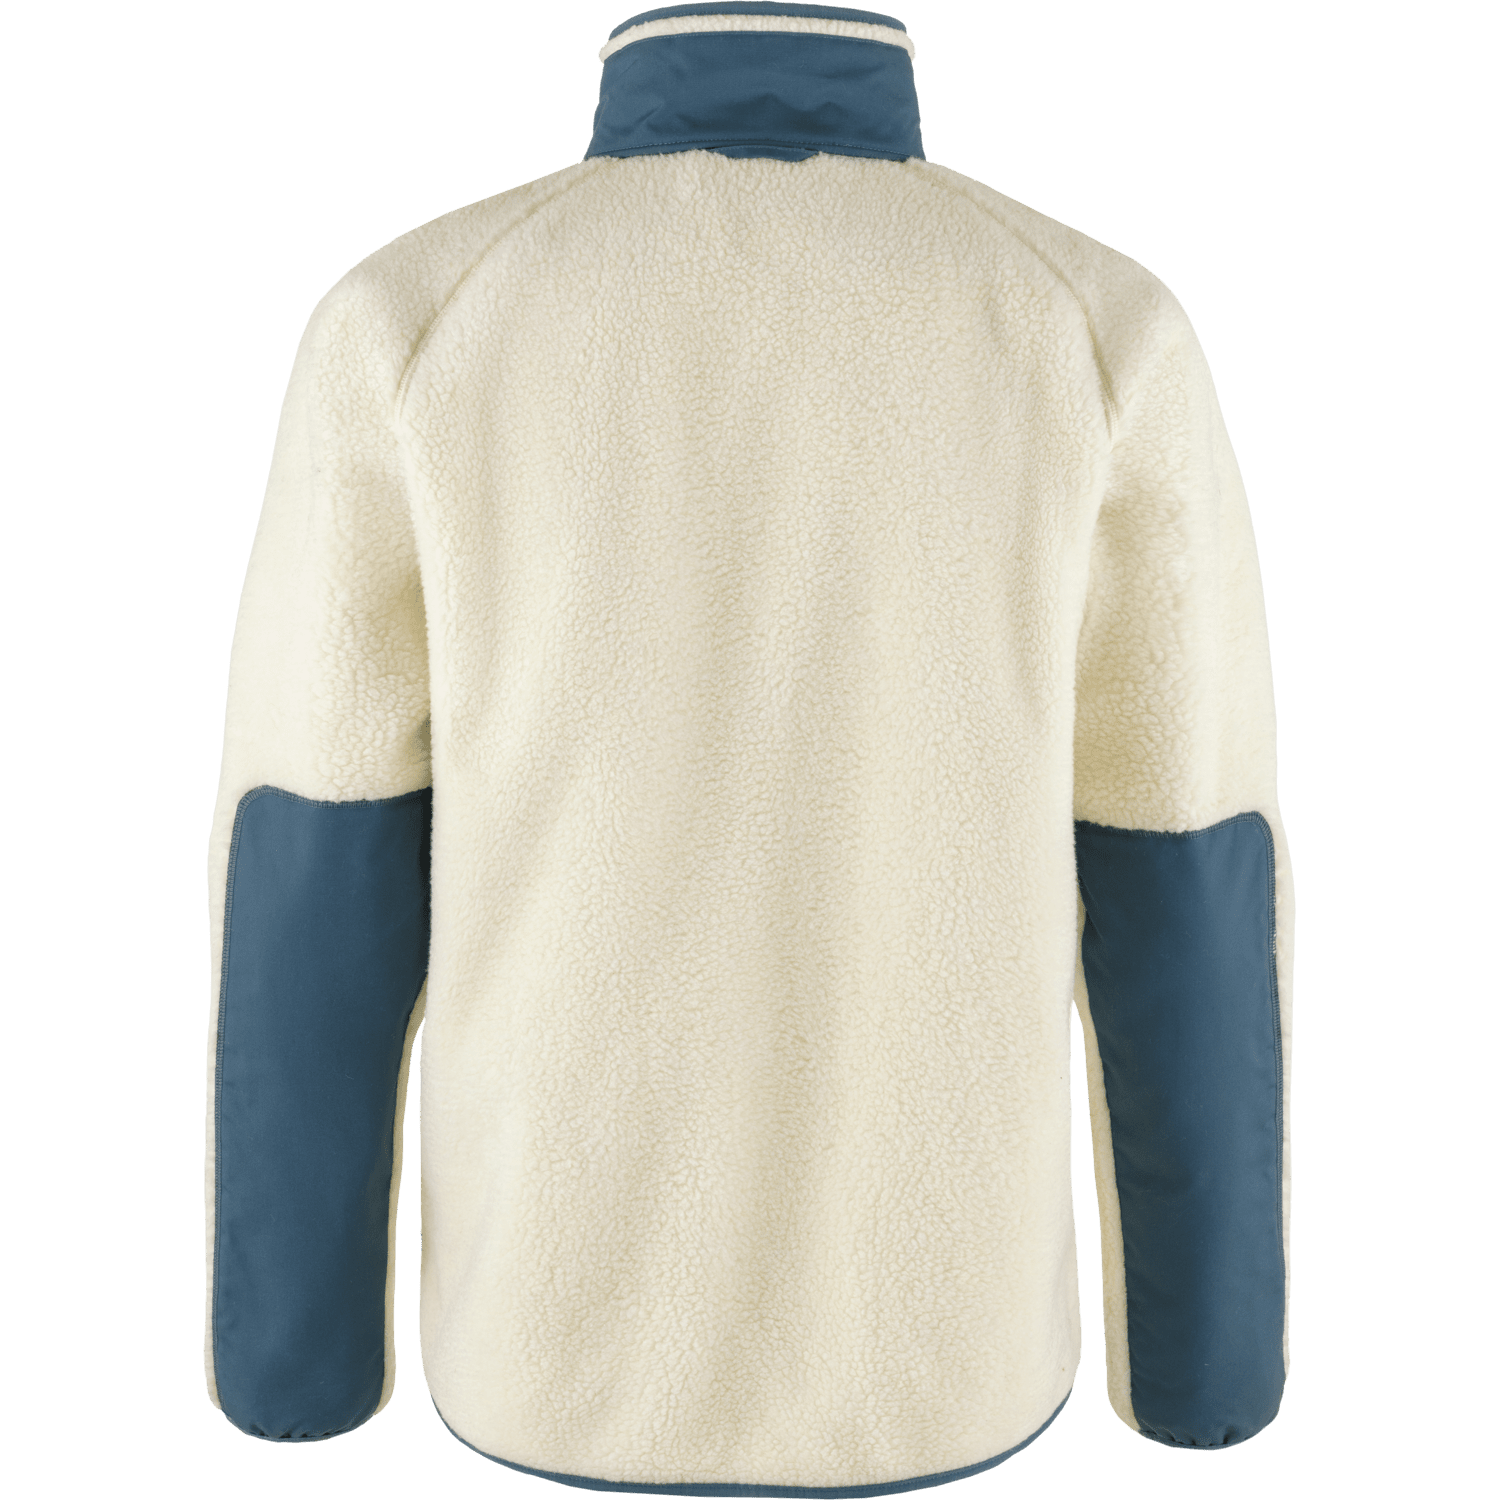 Fjällräven M's Vardag Pile Jacket - Recycled Polyester Chalk White-Indigo Blue Jacket